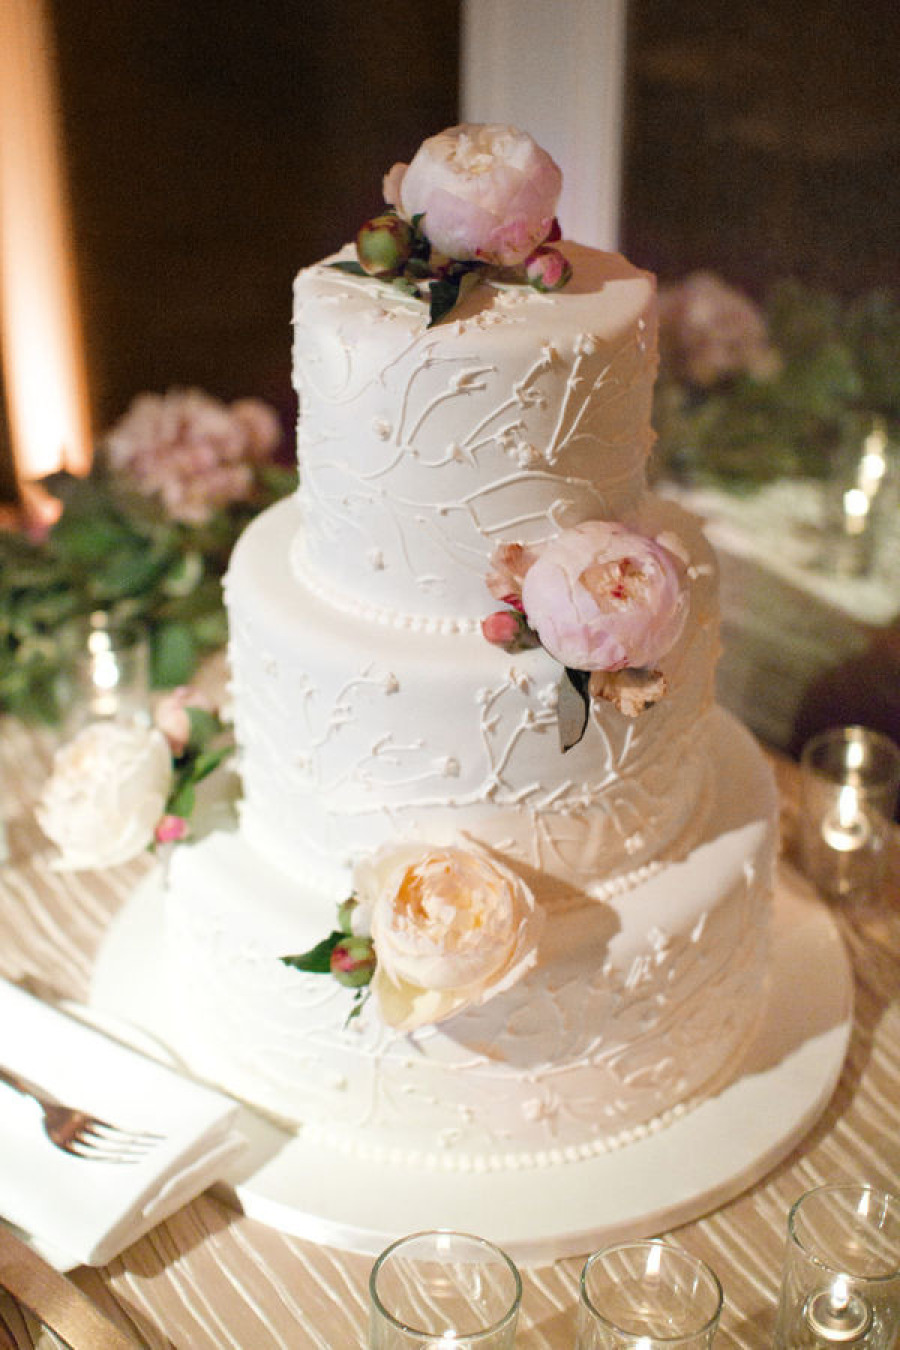 kroger-new-wedding-cakes-wedding-cakes--42-cool-inspiring-wedding-cakes-design-ideas